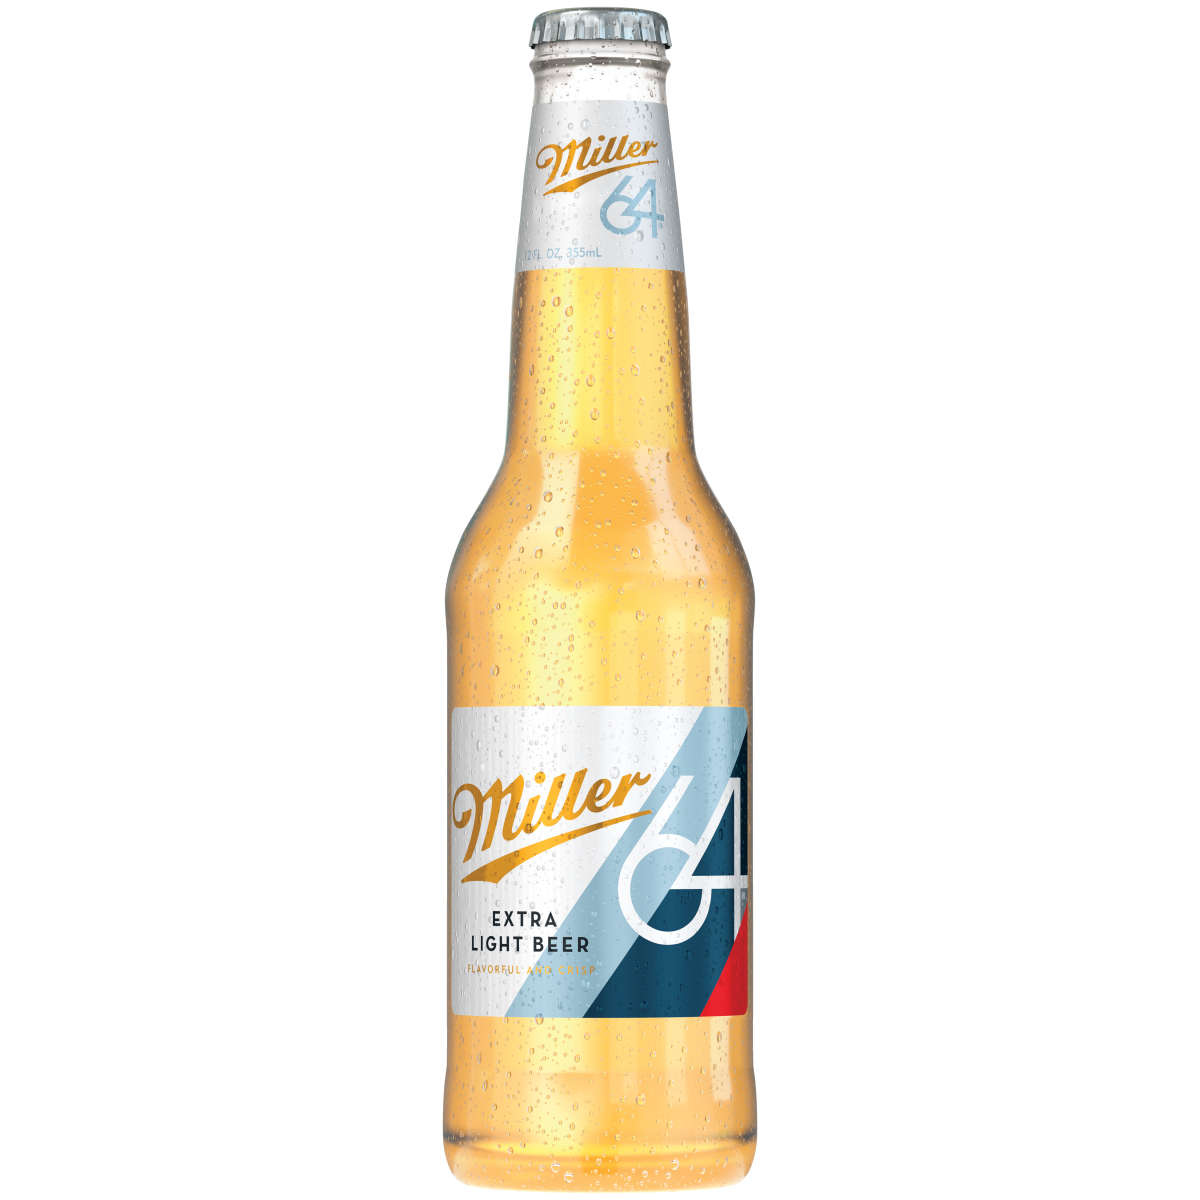 Miller 64. Пиво Миллер Миллер. Miller Lite пиво. Миллер 64 пиво.